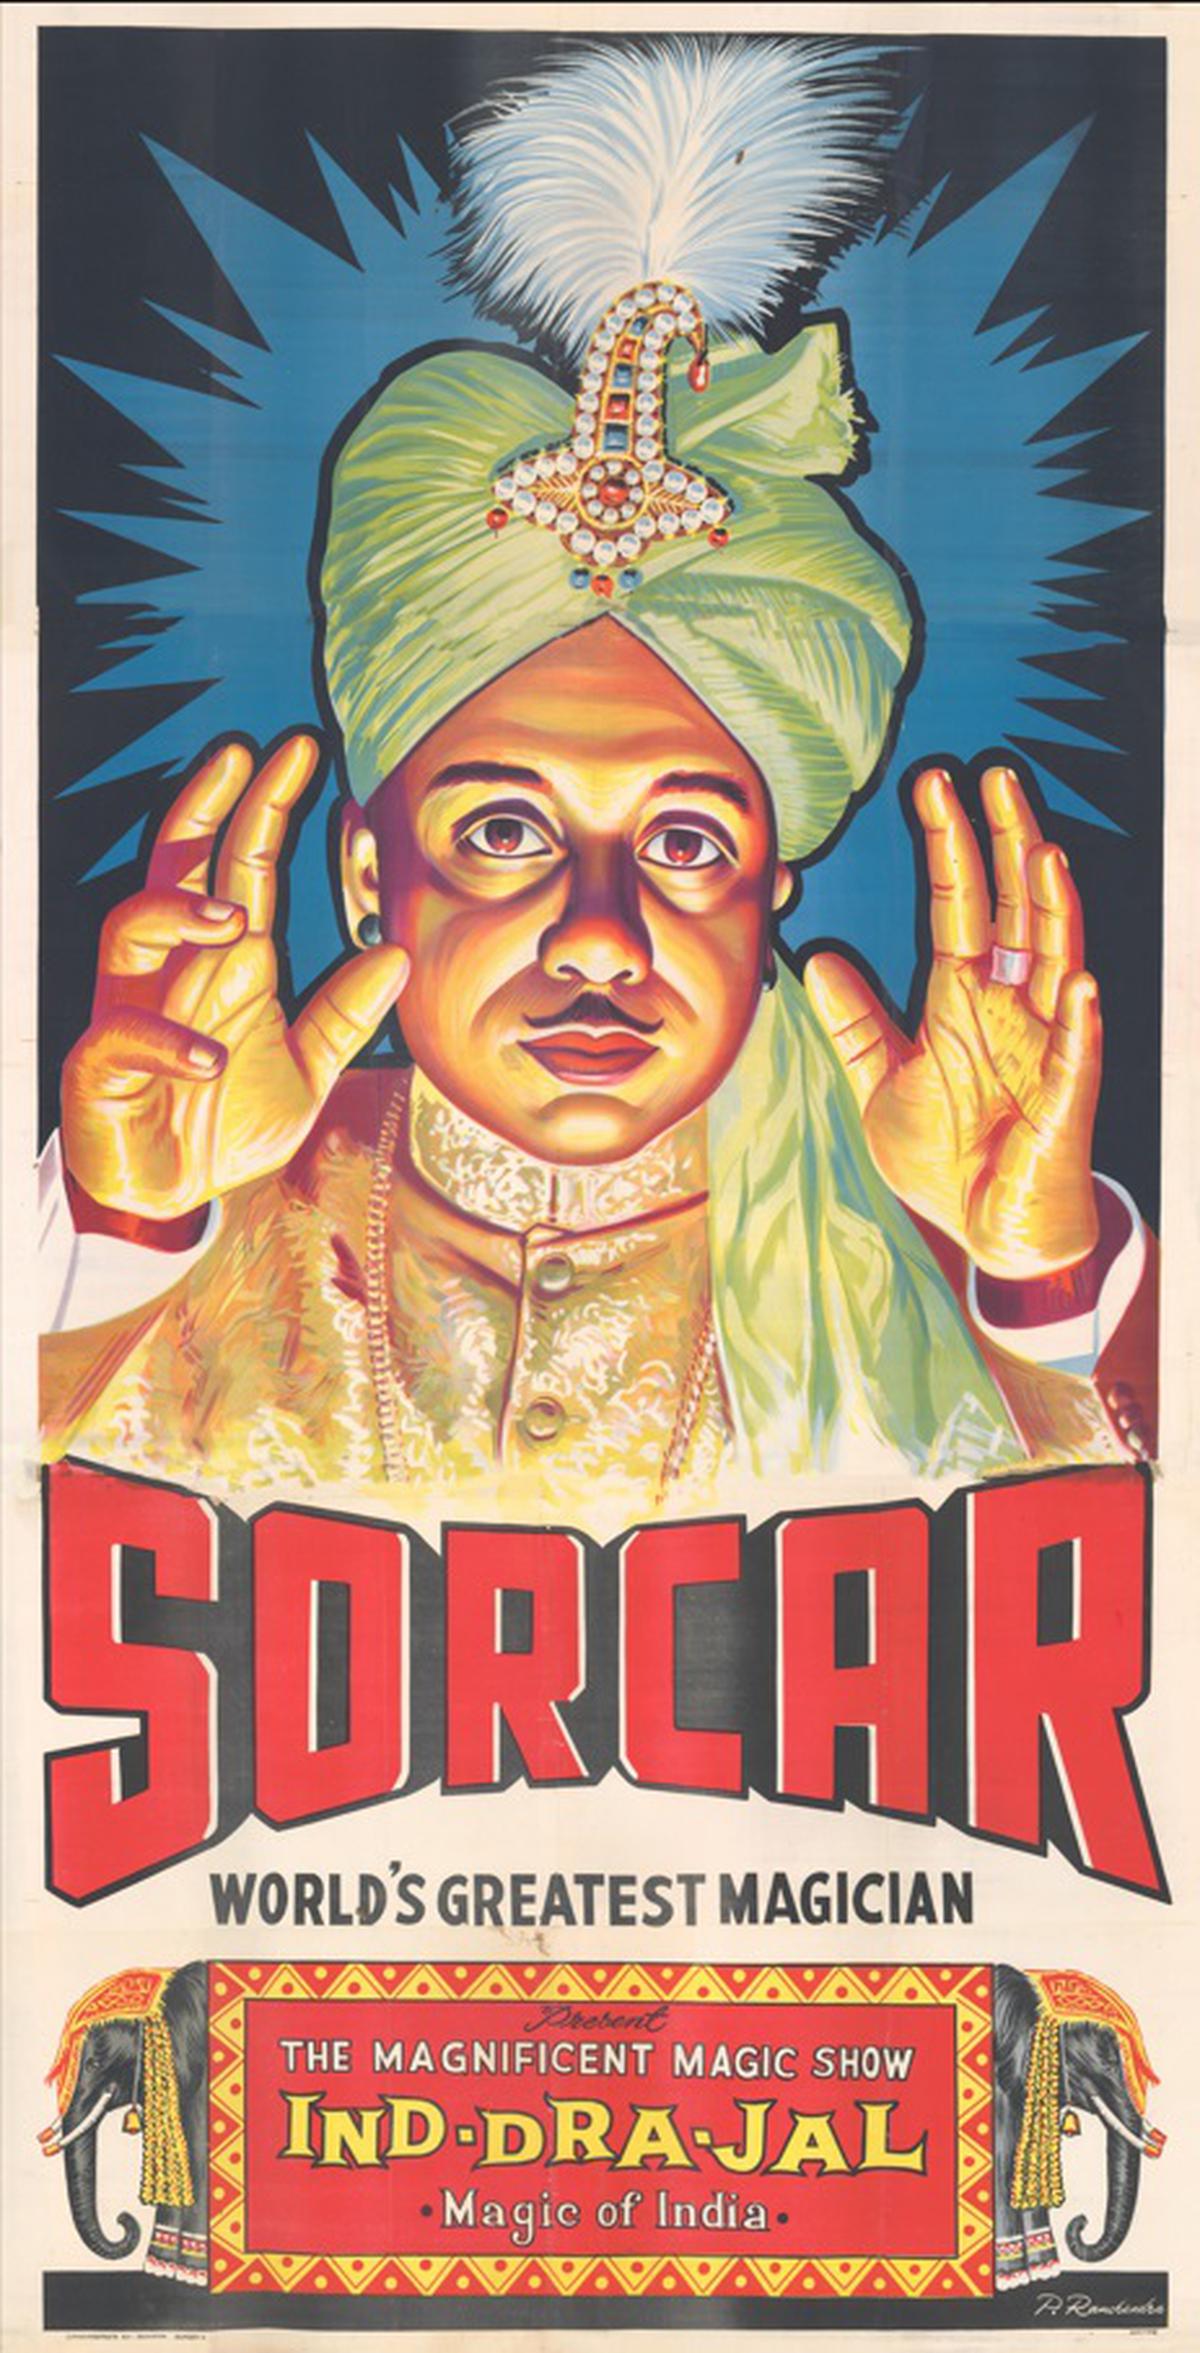 A portrait of Indian magician Sorcar, published by Calcutta Art Studio